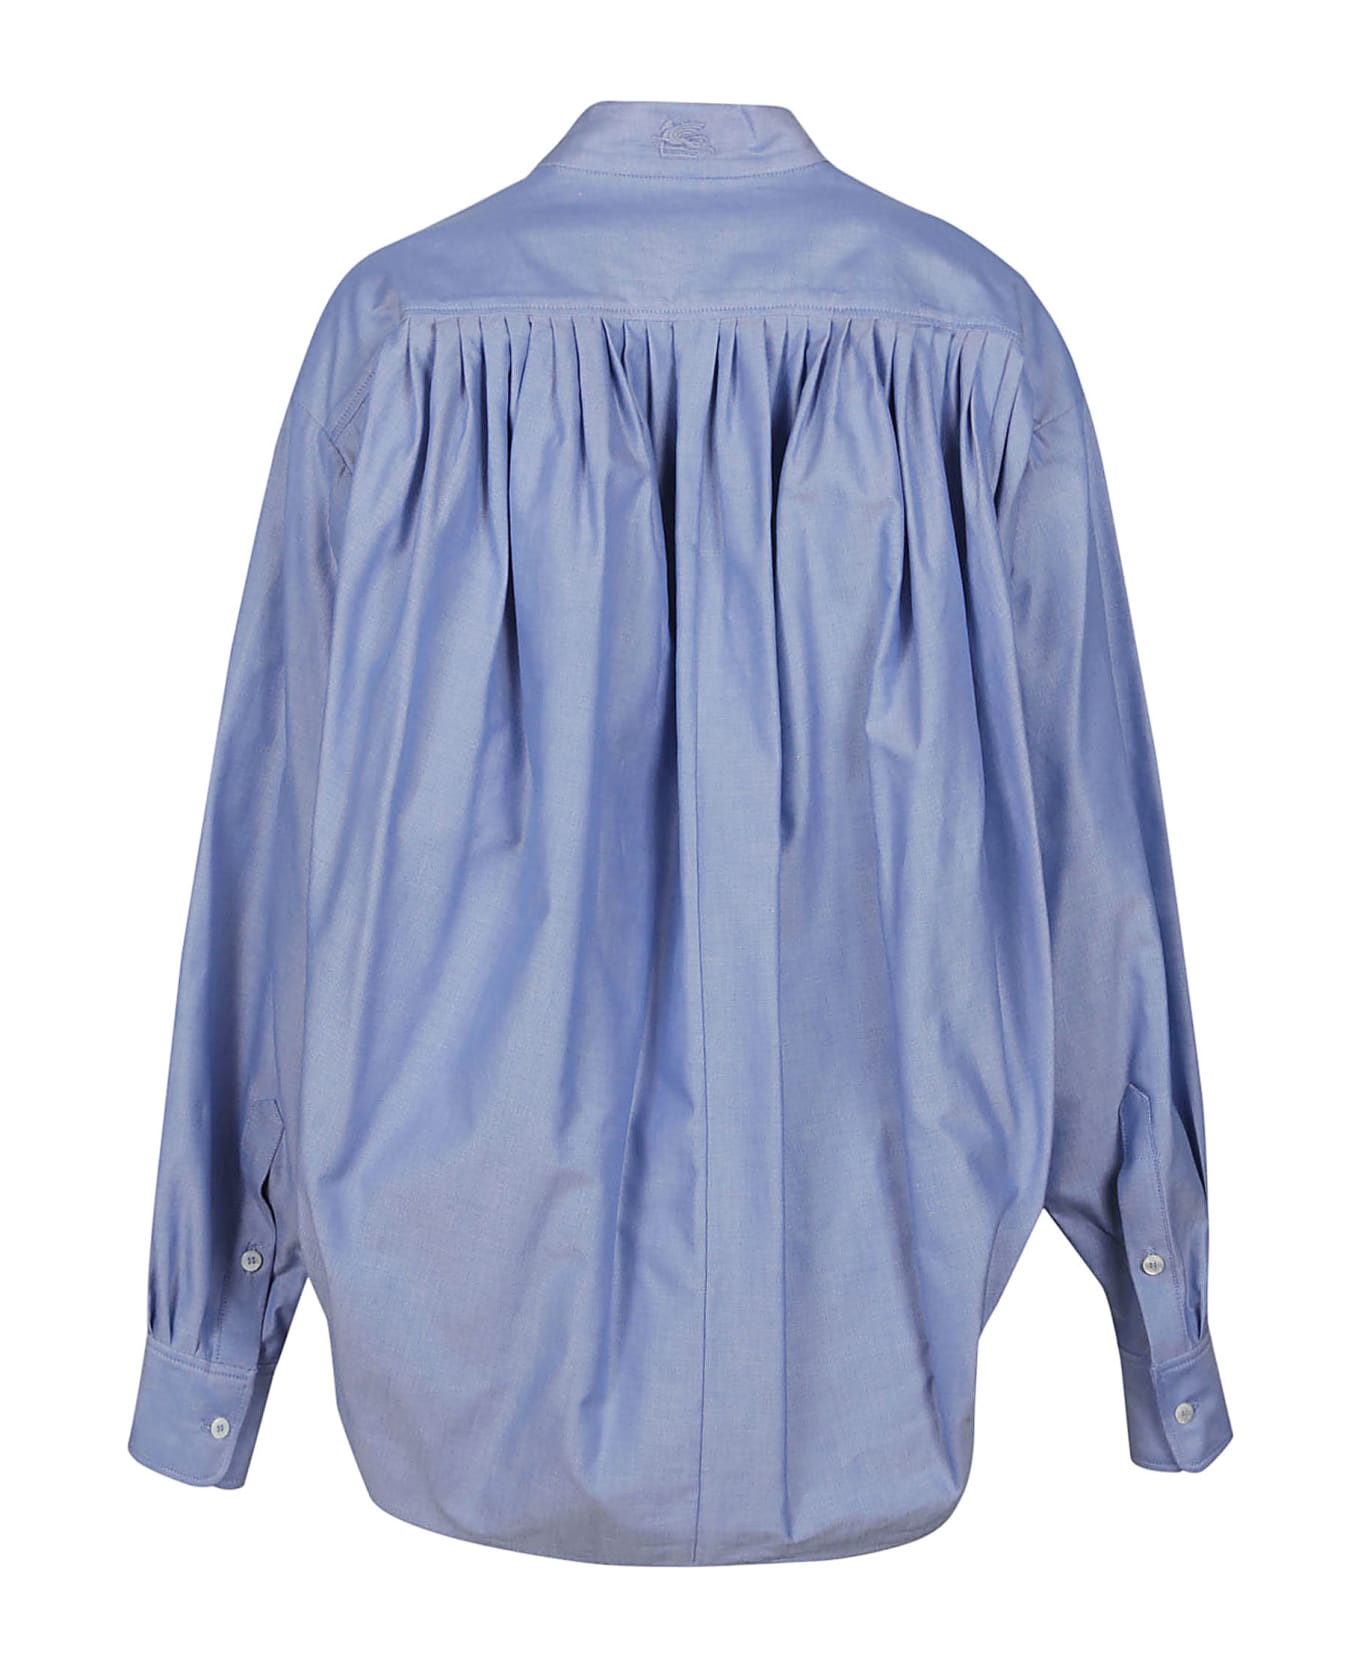 Etro Long Sleeve Oxford Shirt - Azzurro